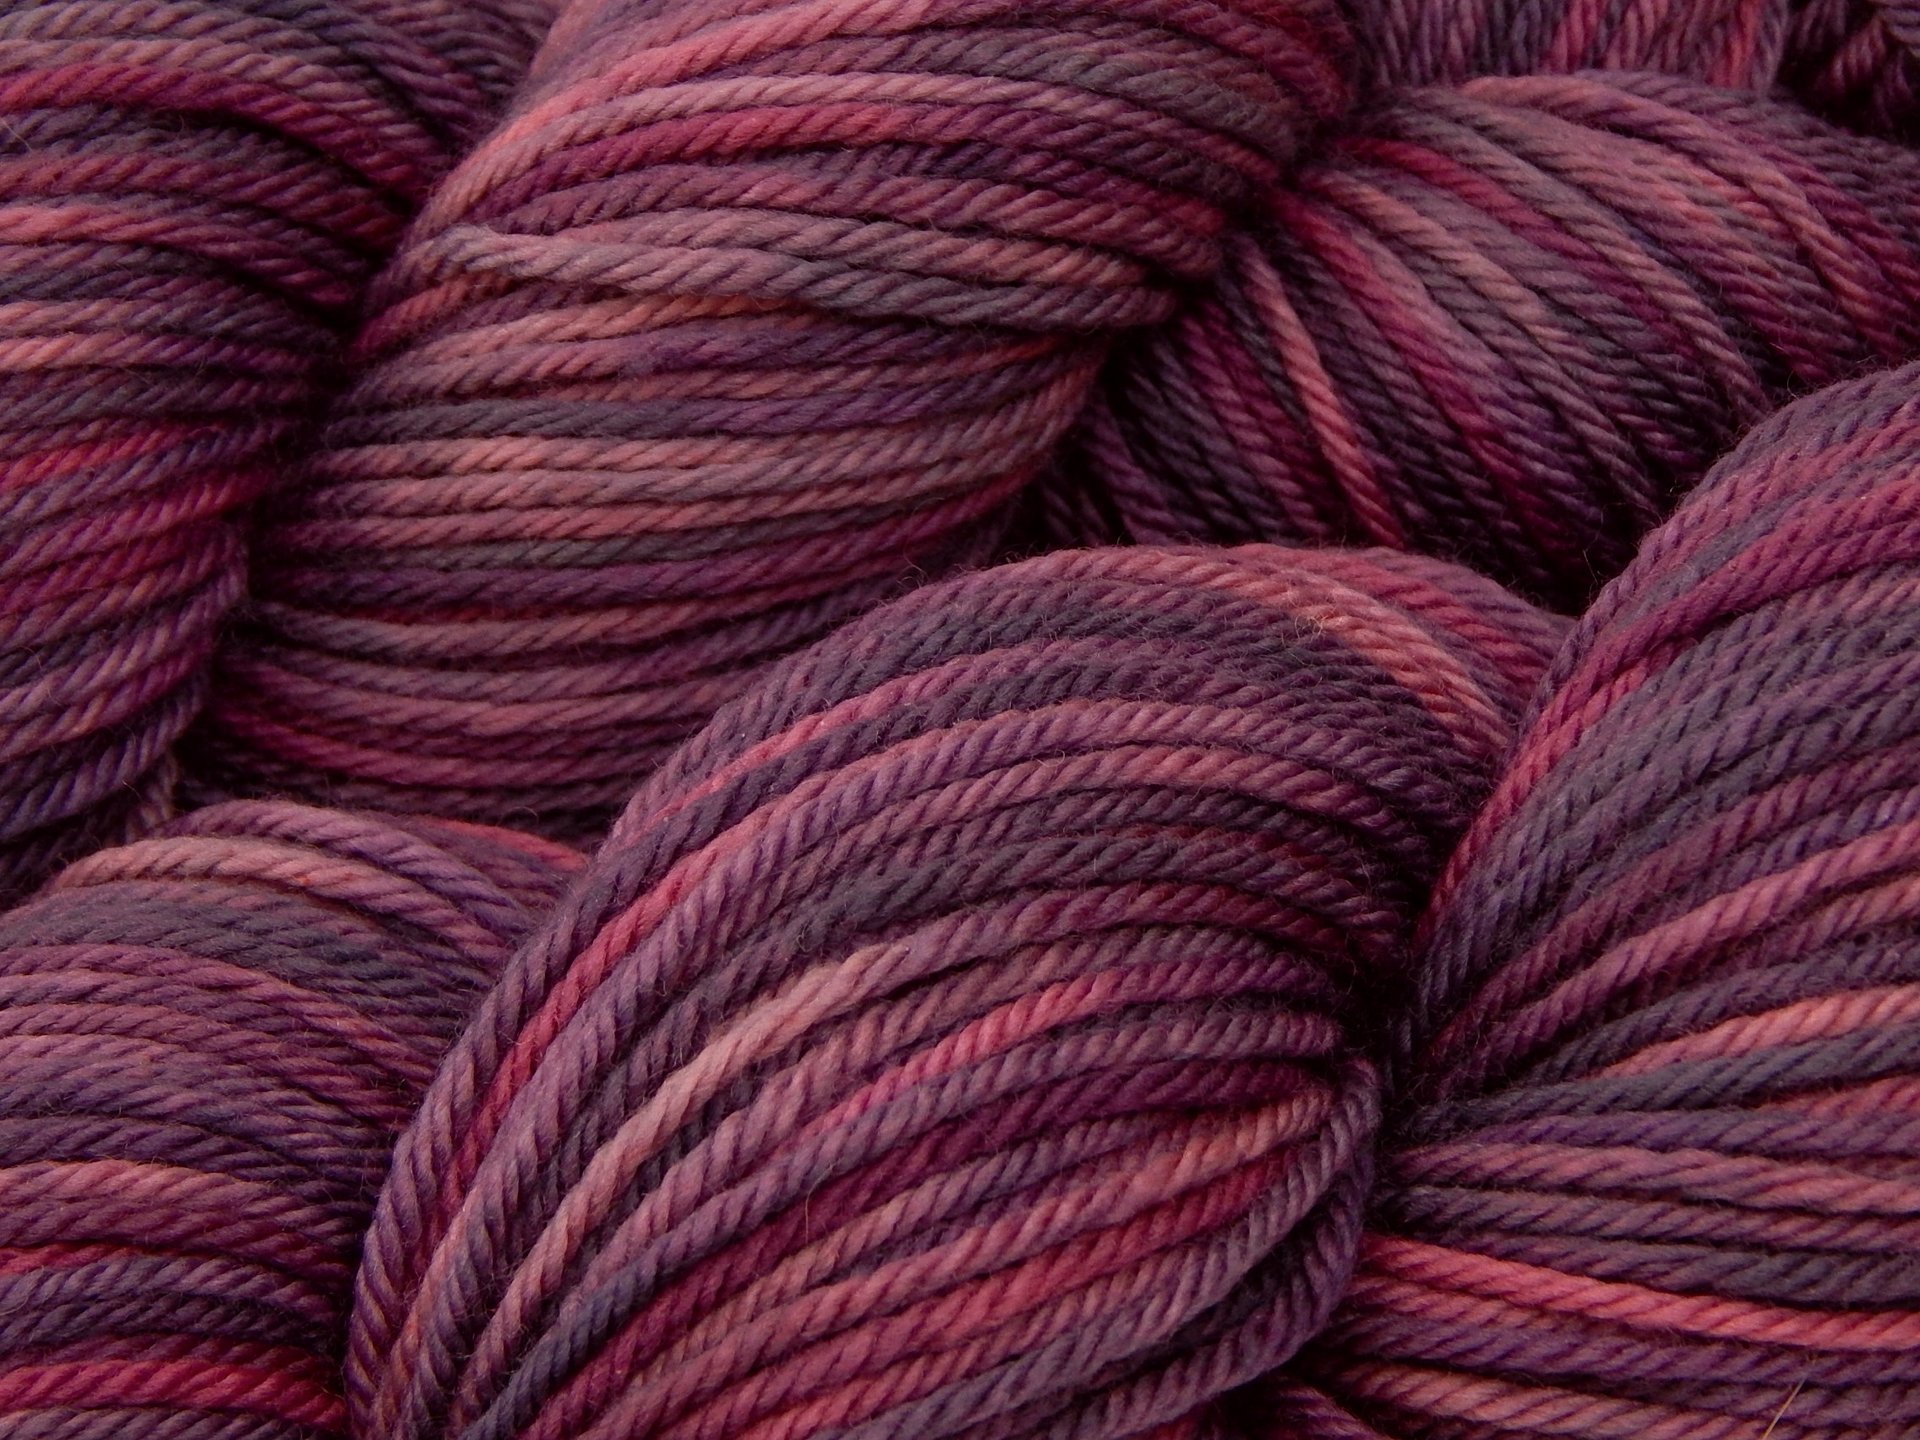 Hand Dyed Yarn, Worsted Weight Superwash 100% Merino Wool - Wisteria Multi - Indie Dyed Lilac Purple Knitting Yarn Skein, DIY Knitter Gift